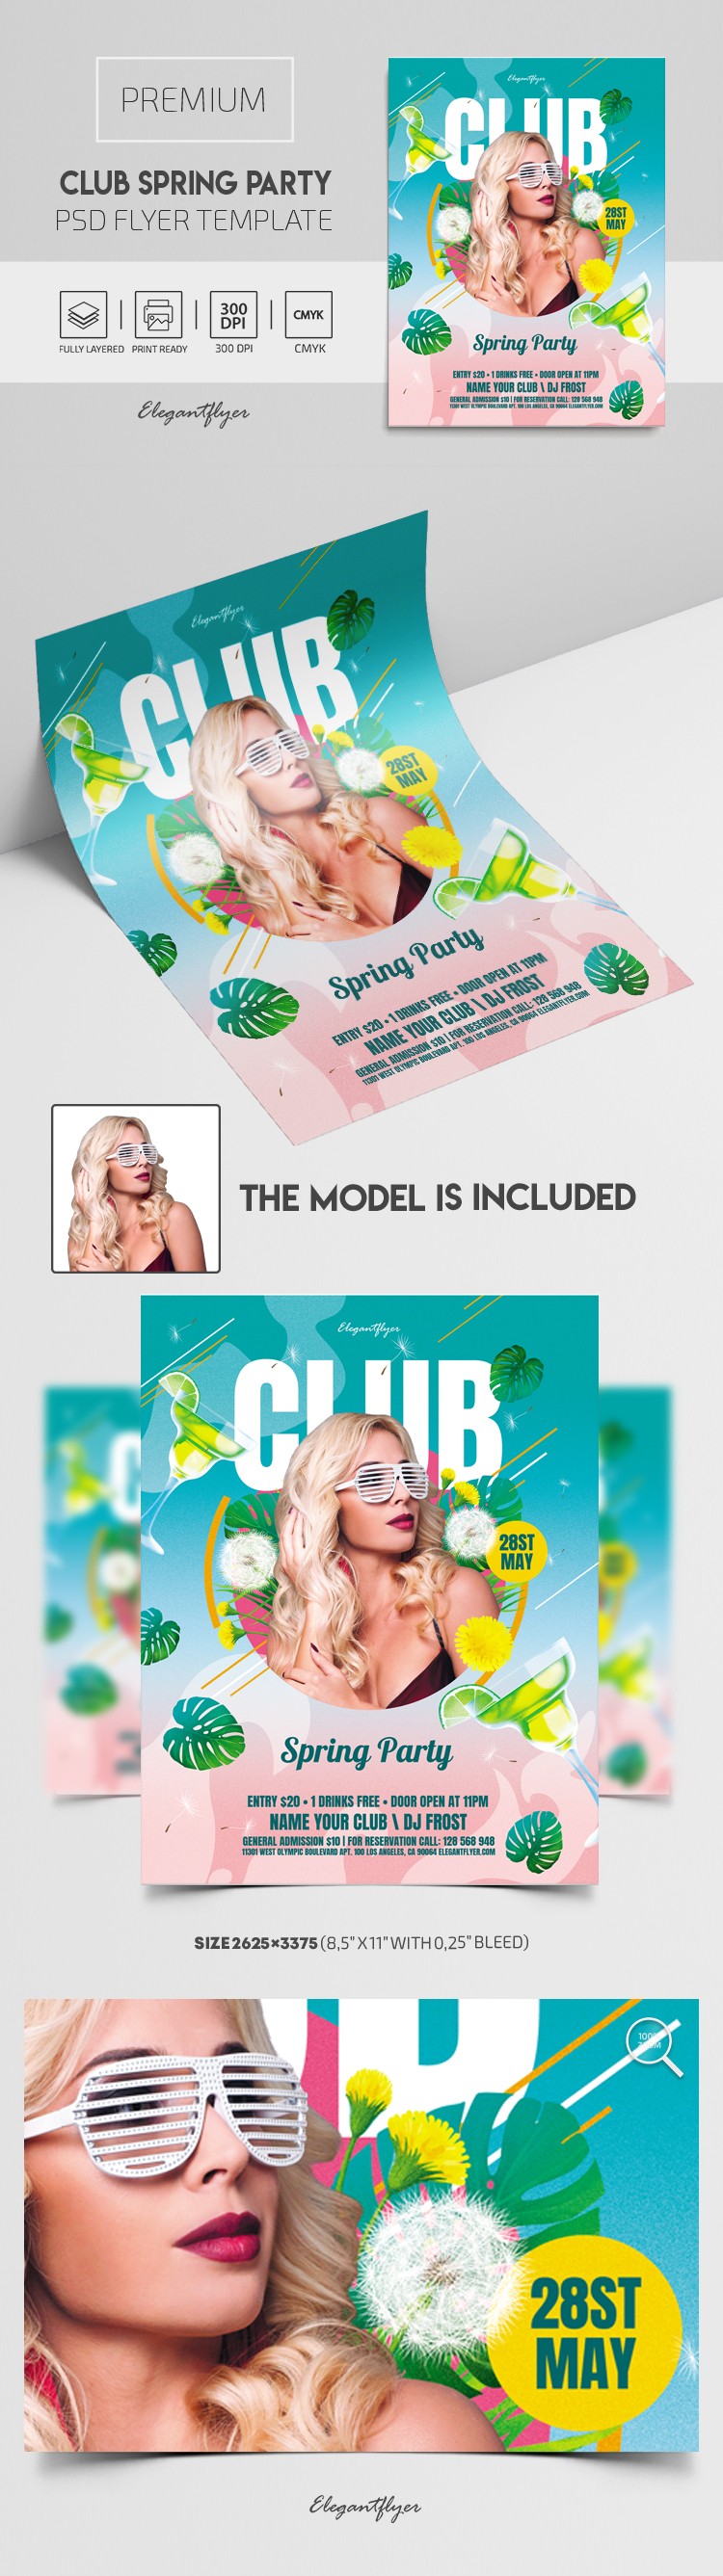 Club Spring Party by ElegantFlyer